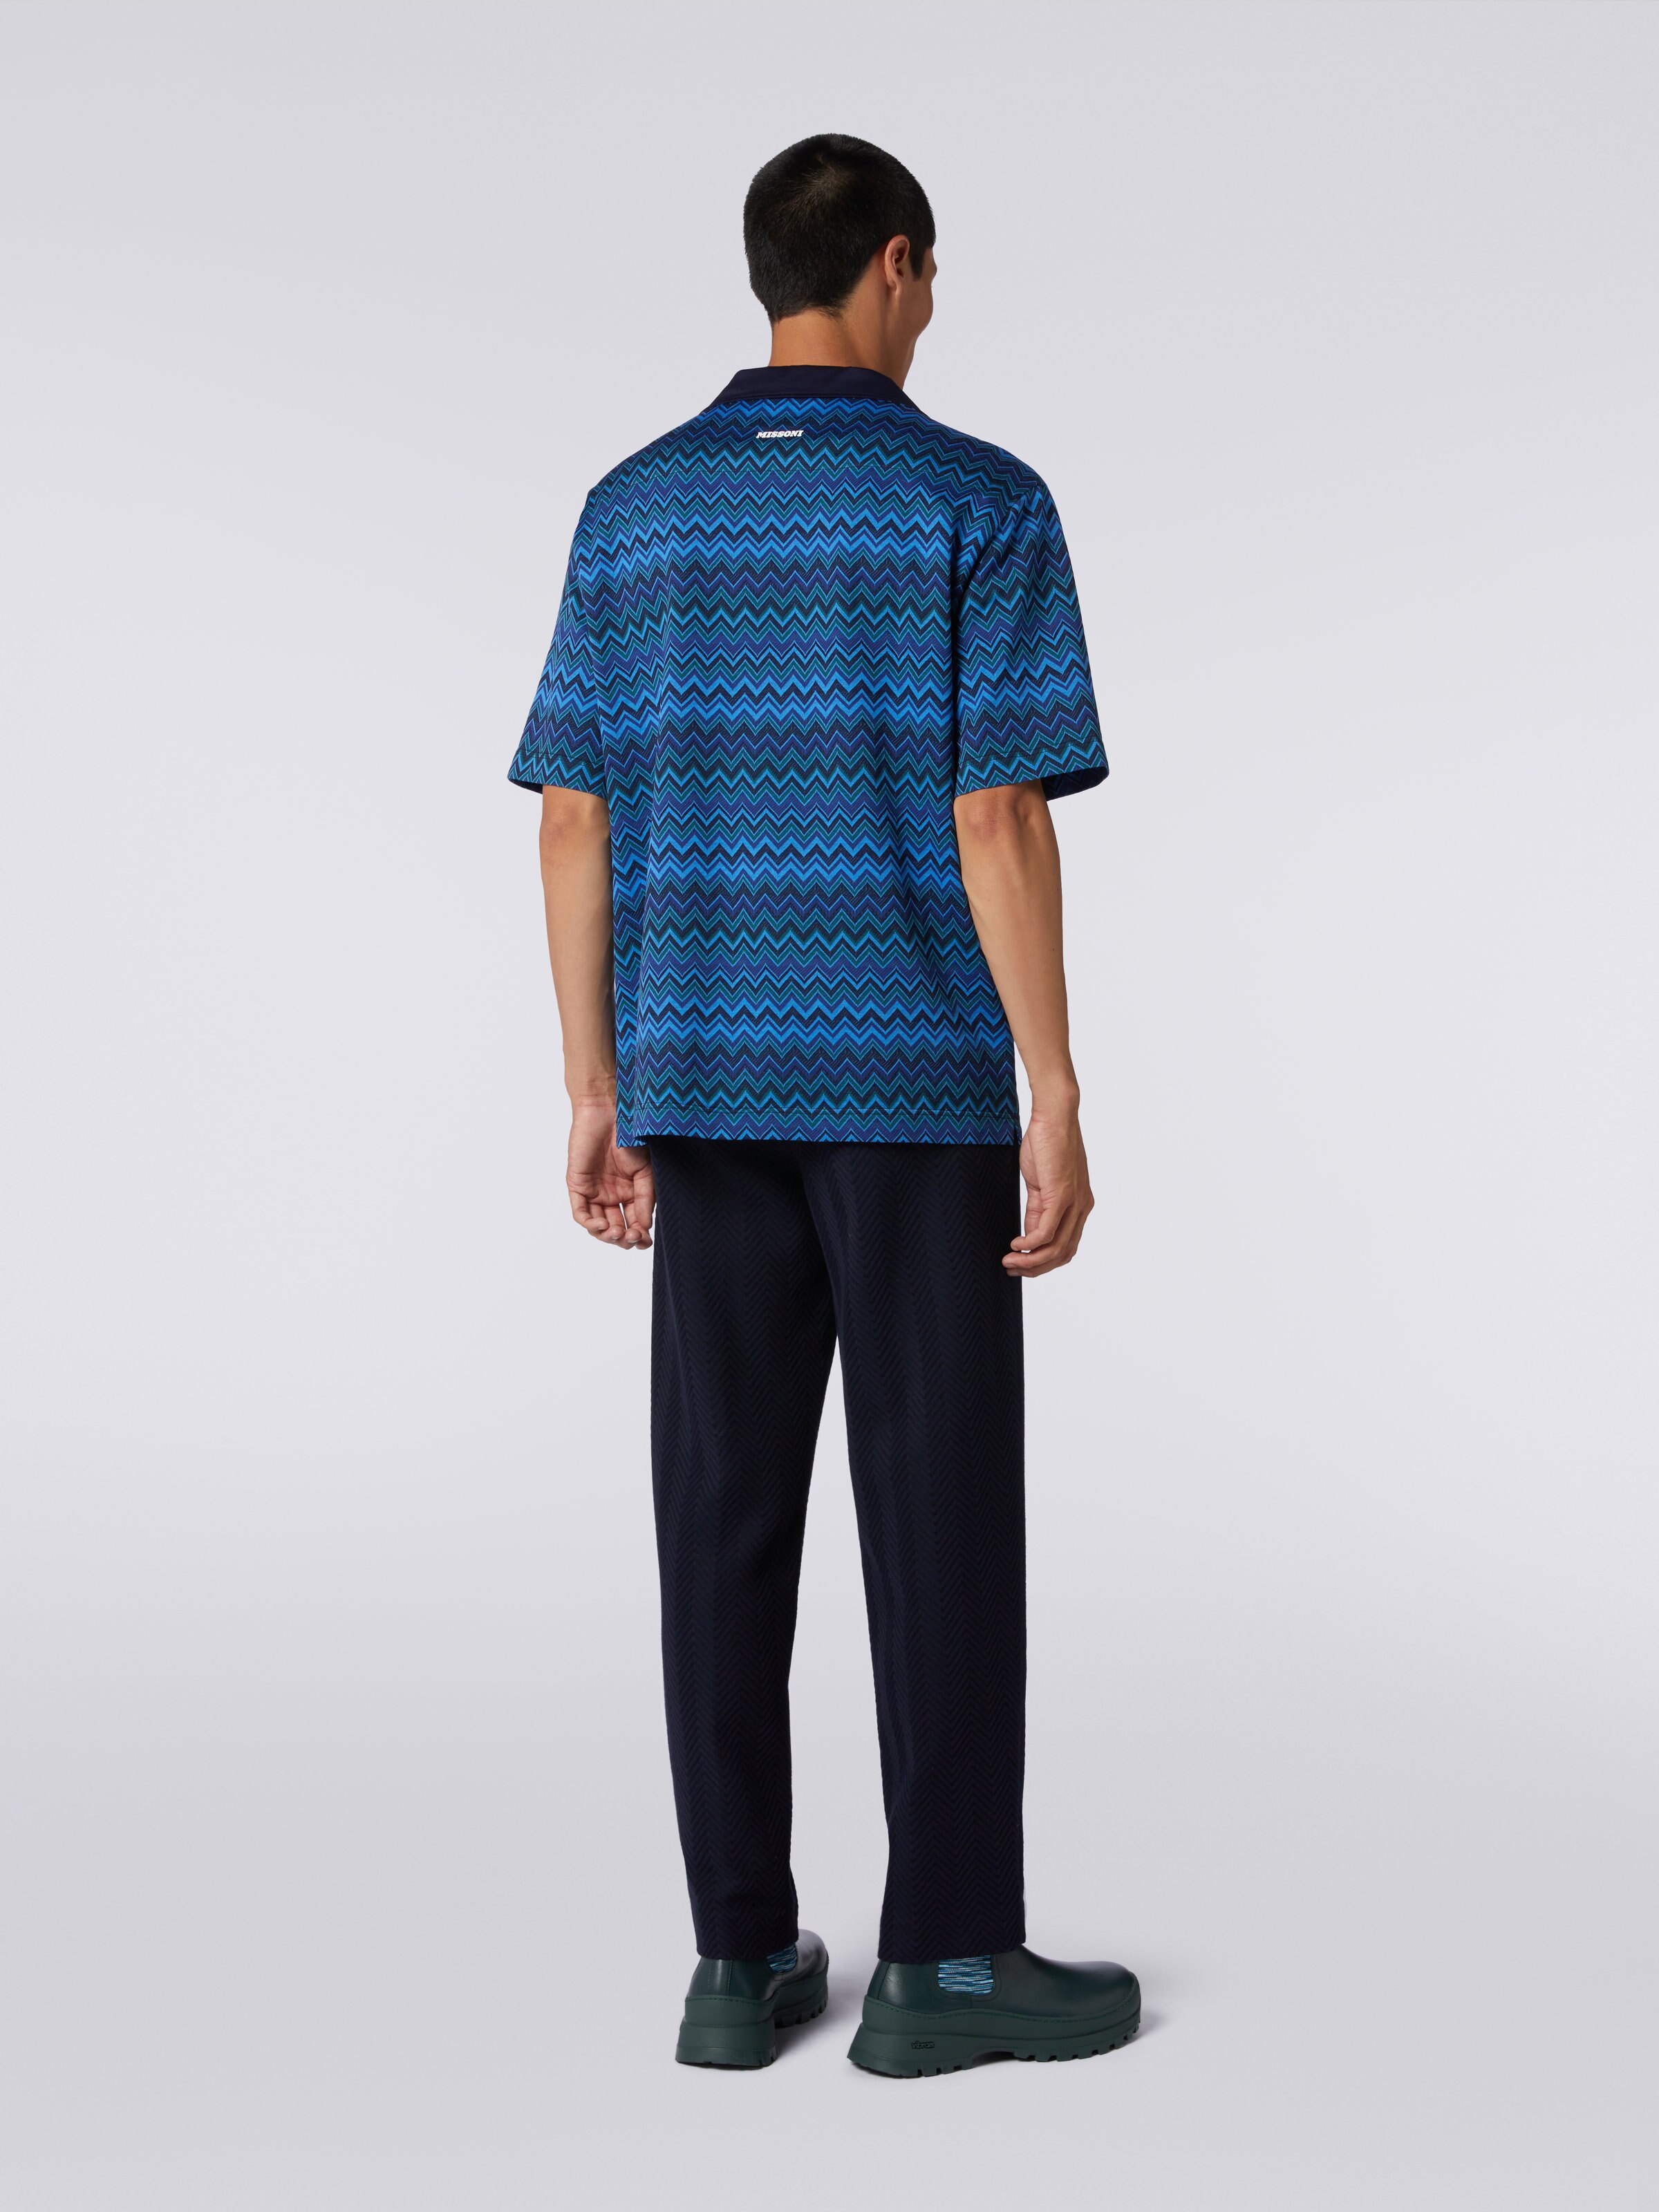 Short-sleeved jacquard knit cotton jersey shirt, Blue - 3